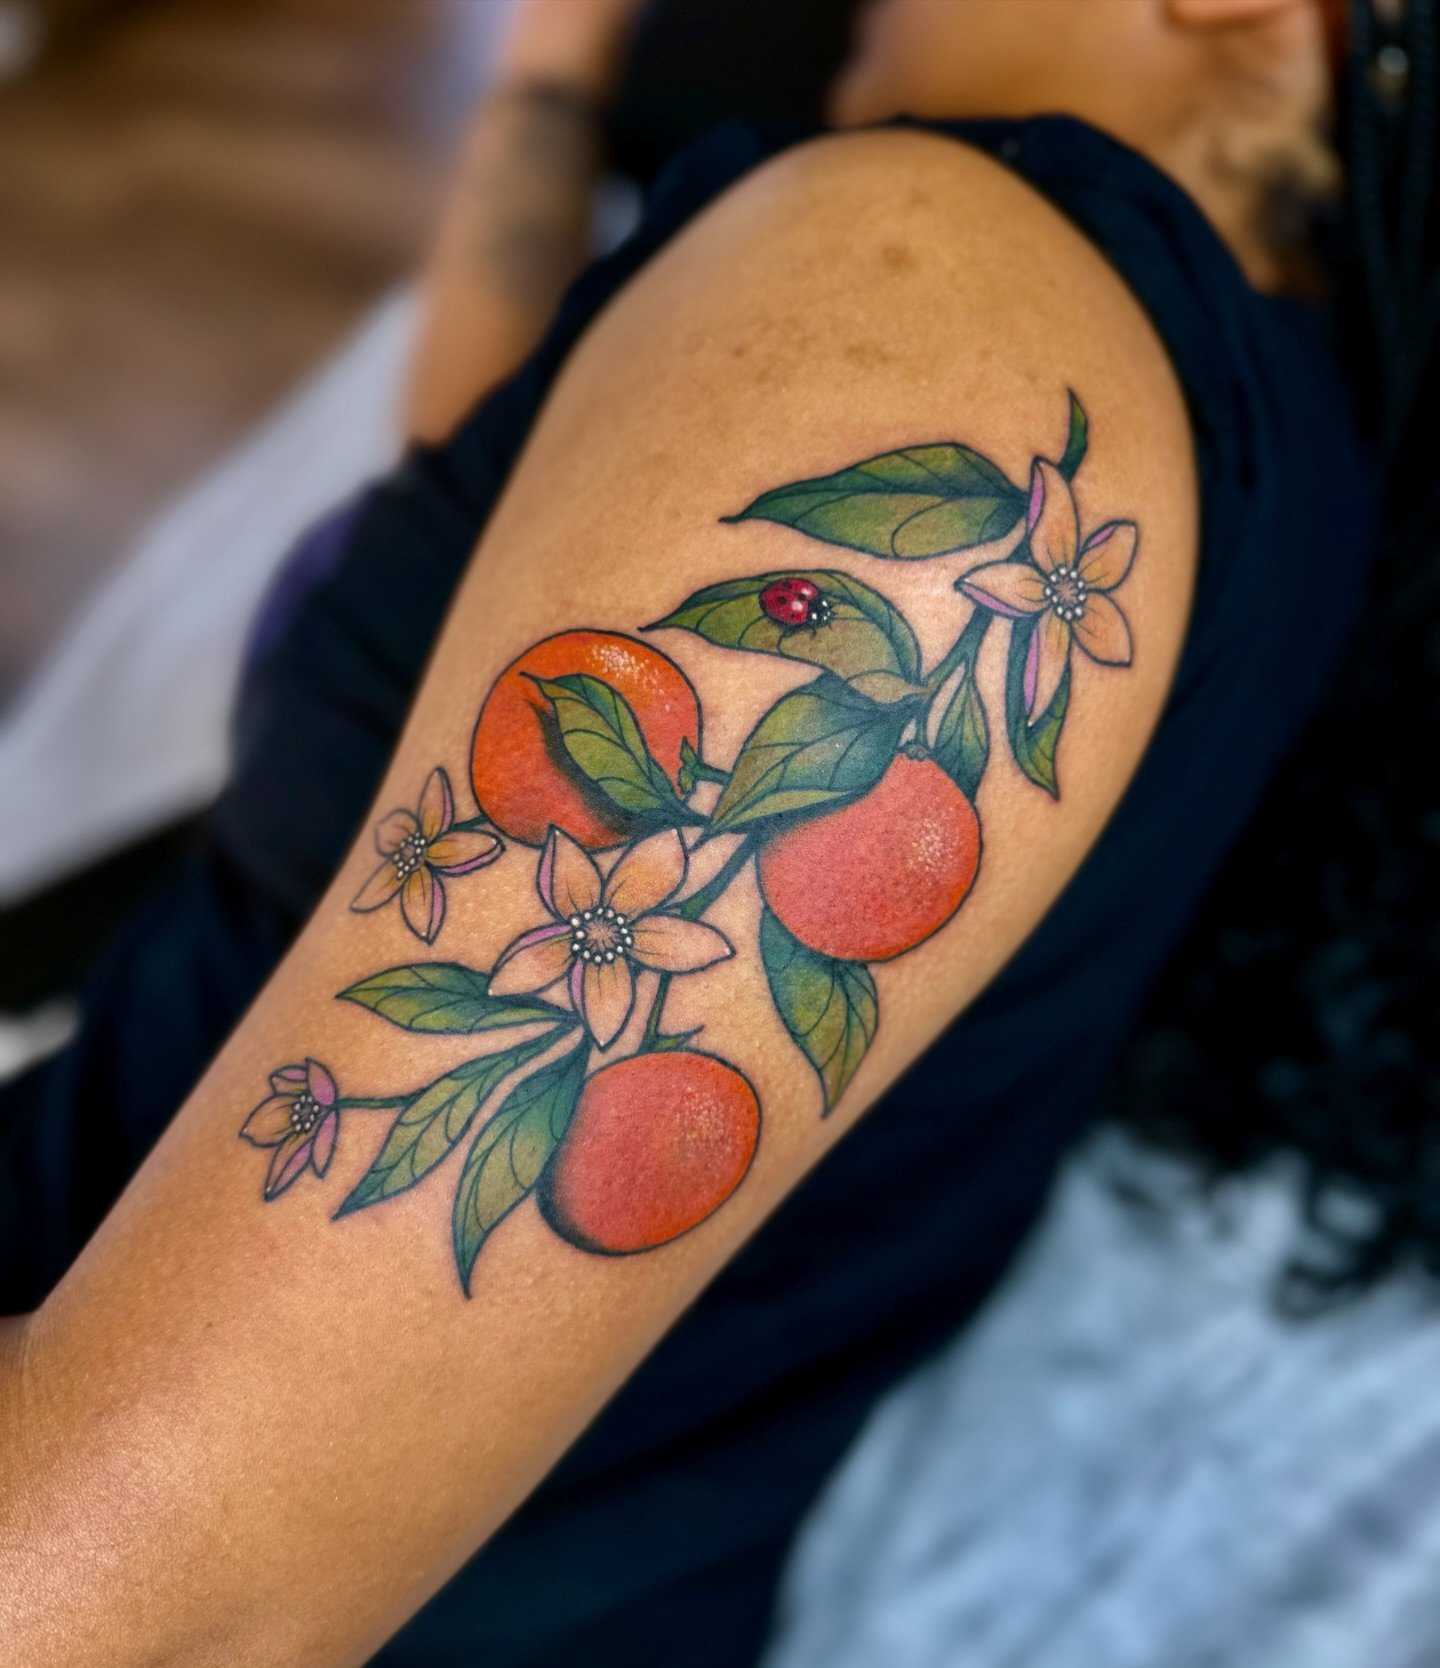 clementines for Nadia 🍊 

#clementine #fruittattoo #tattooart #neotrad #neotradsub #oranges #orangetattoo #savannahtattoo #savannahgeorgia #colortattoo #ladybugtattoo